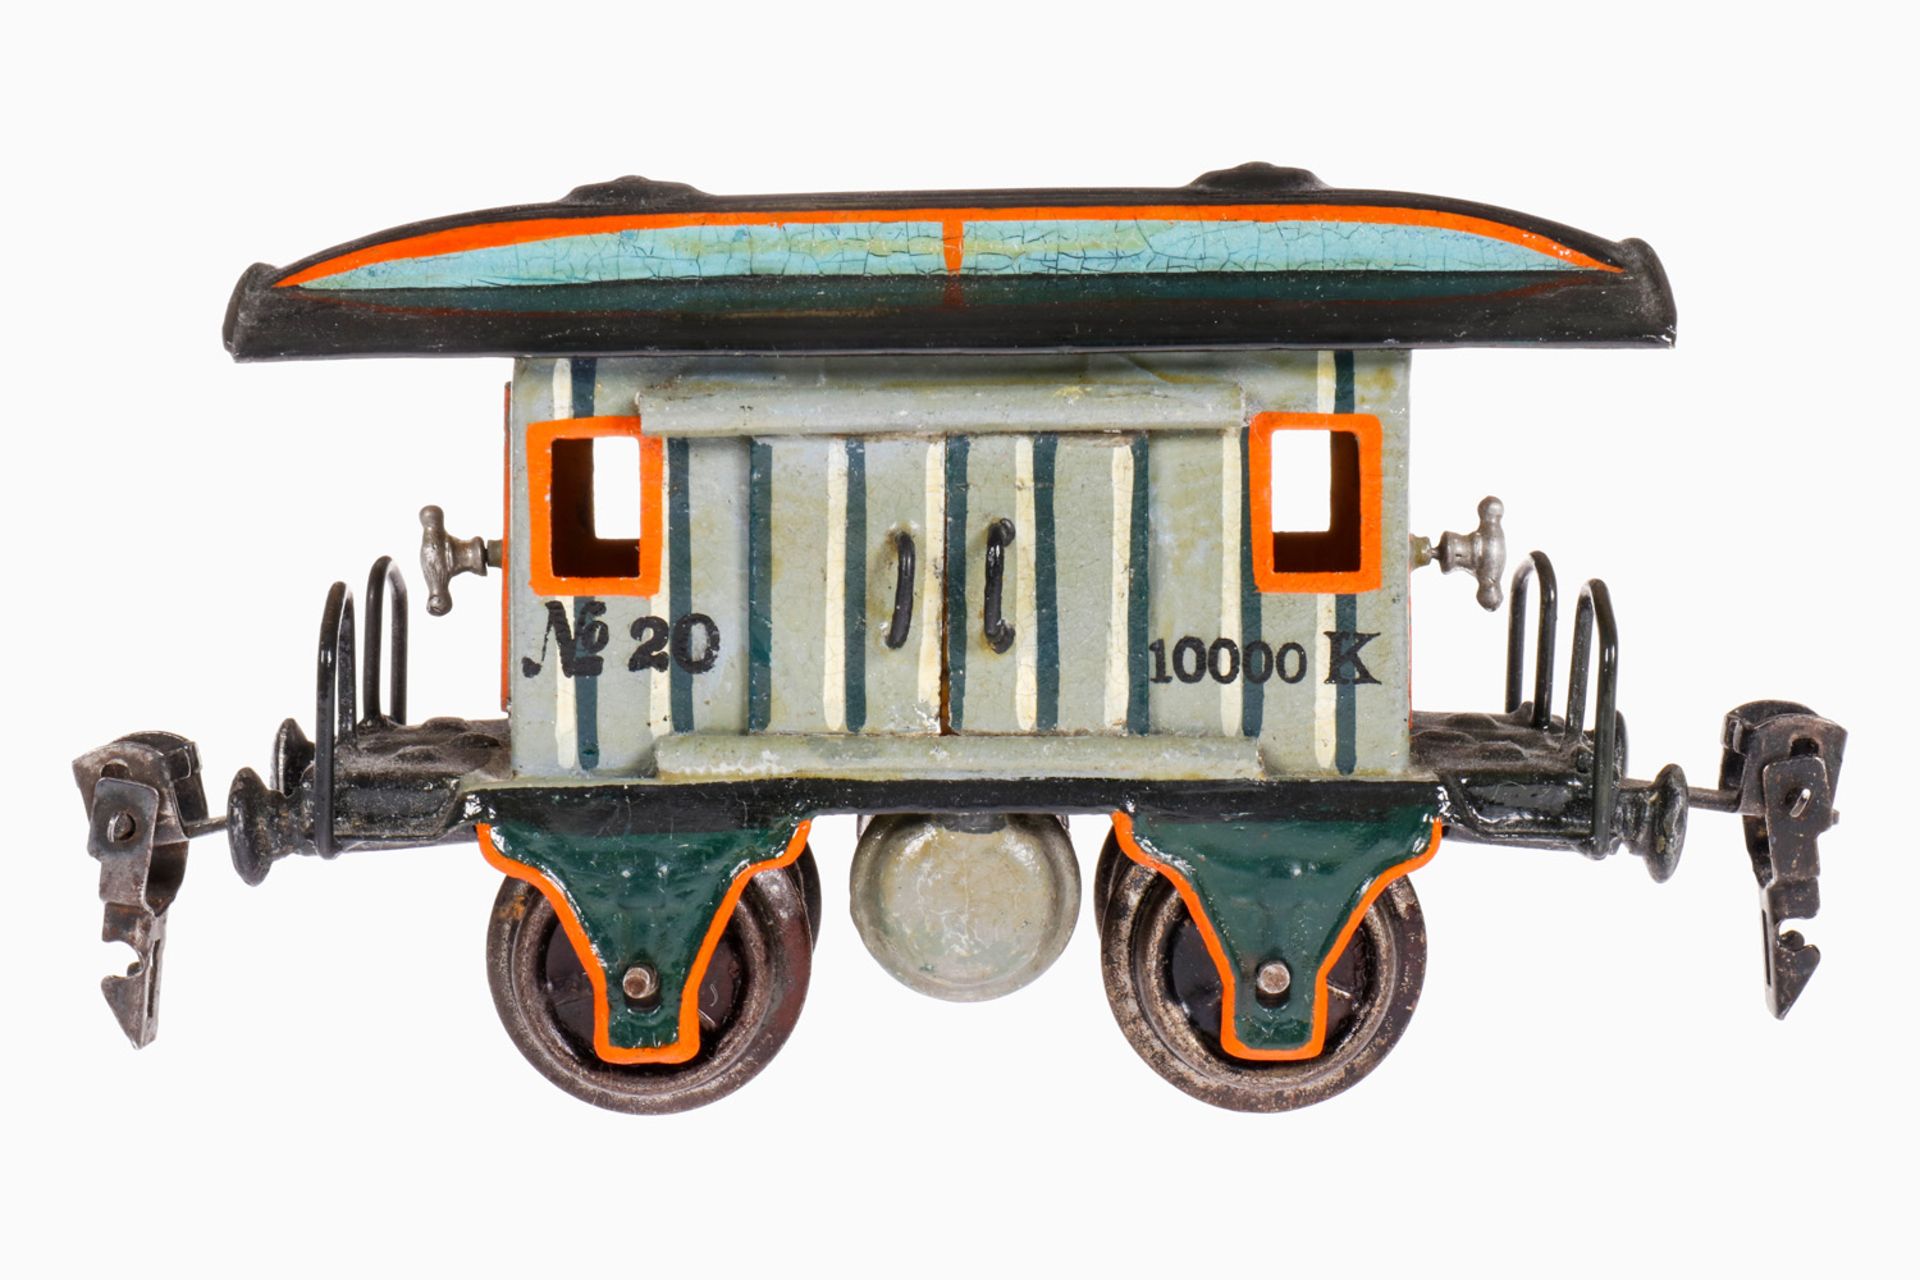 Märklin Gepäckwagen 1823, S 0, uralt, handlackiert, 2 AT, 2x2 ST, querliegender Gaszylinder, mit